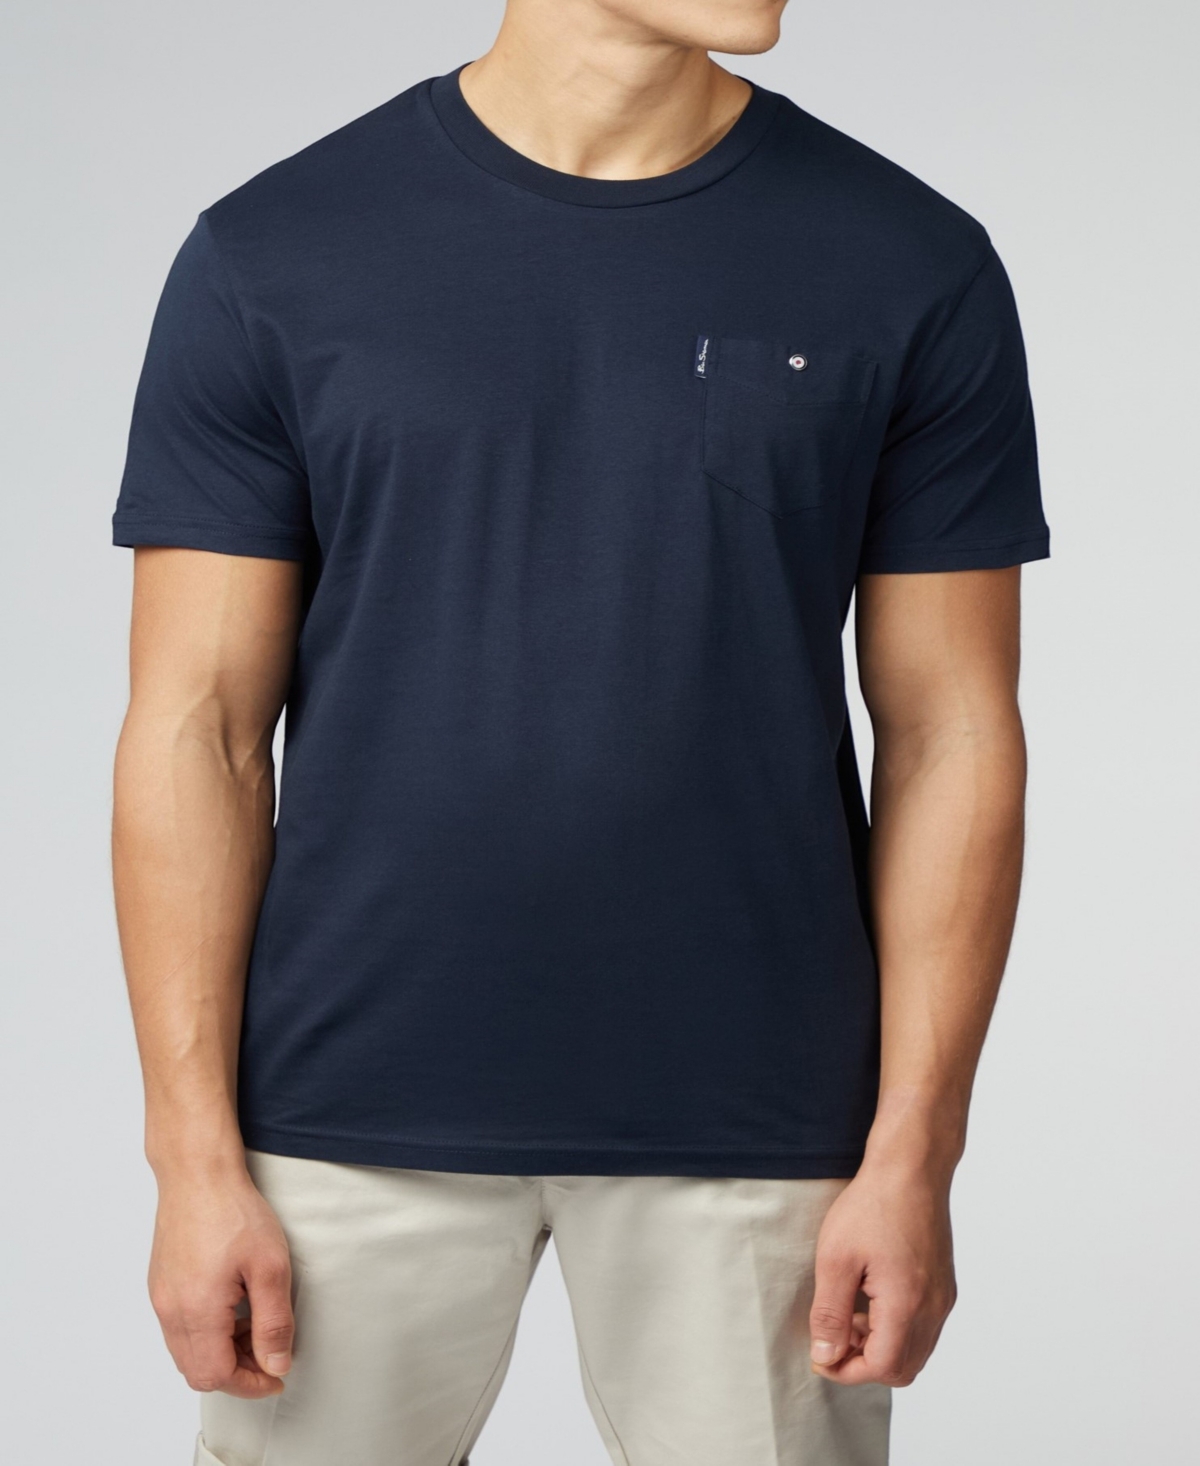 Men's Signature Pocket Short Sleeve T-shirt - Teal